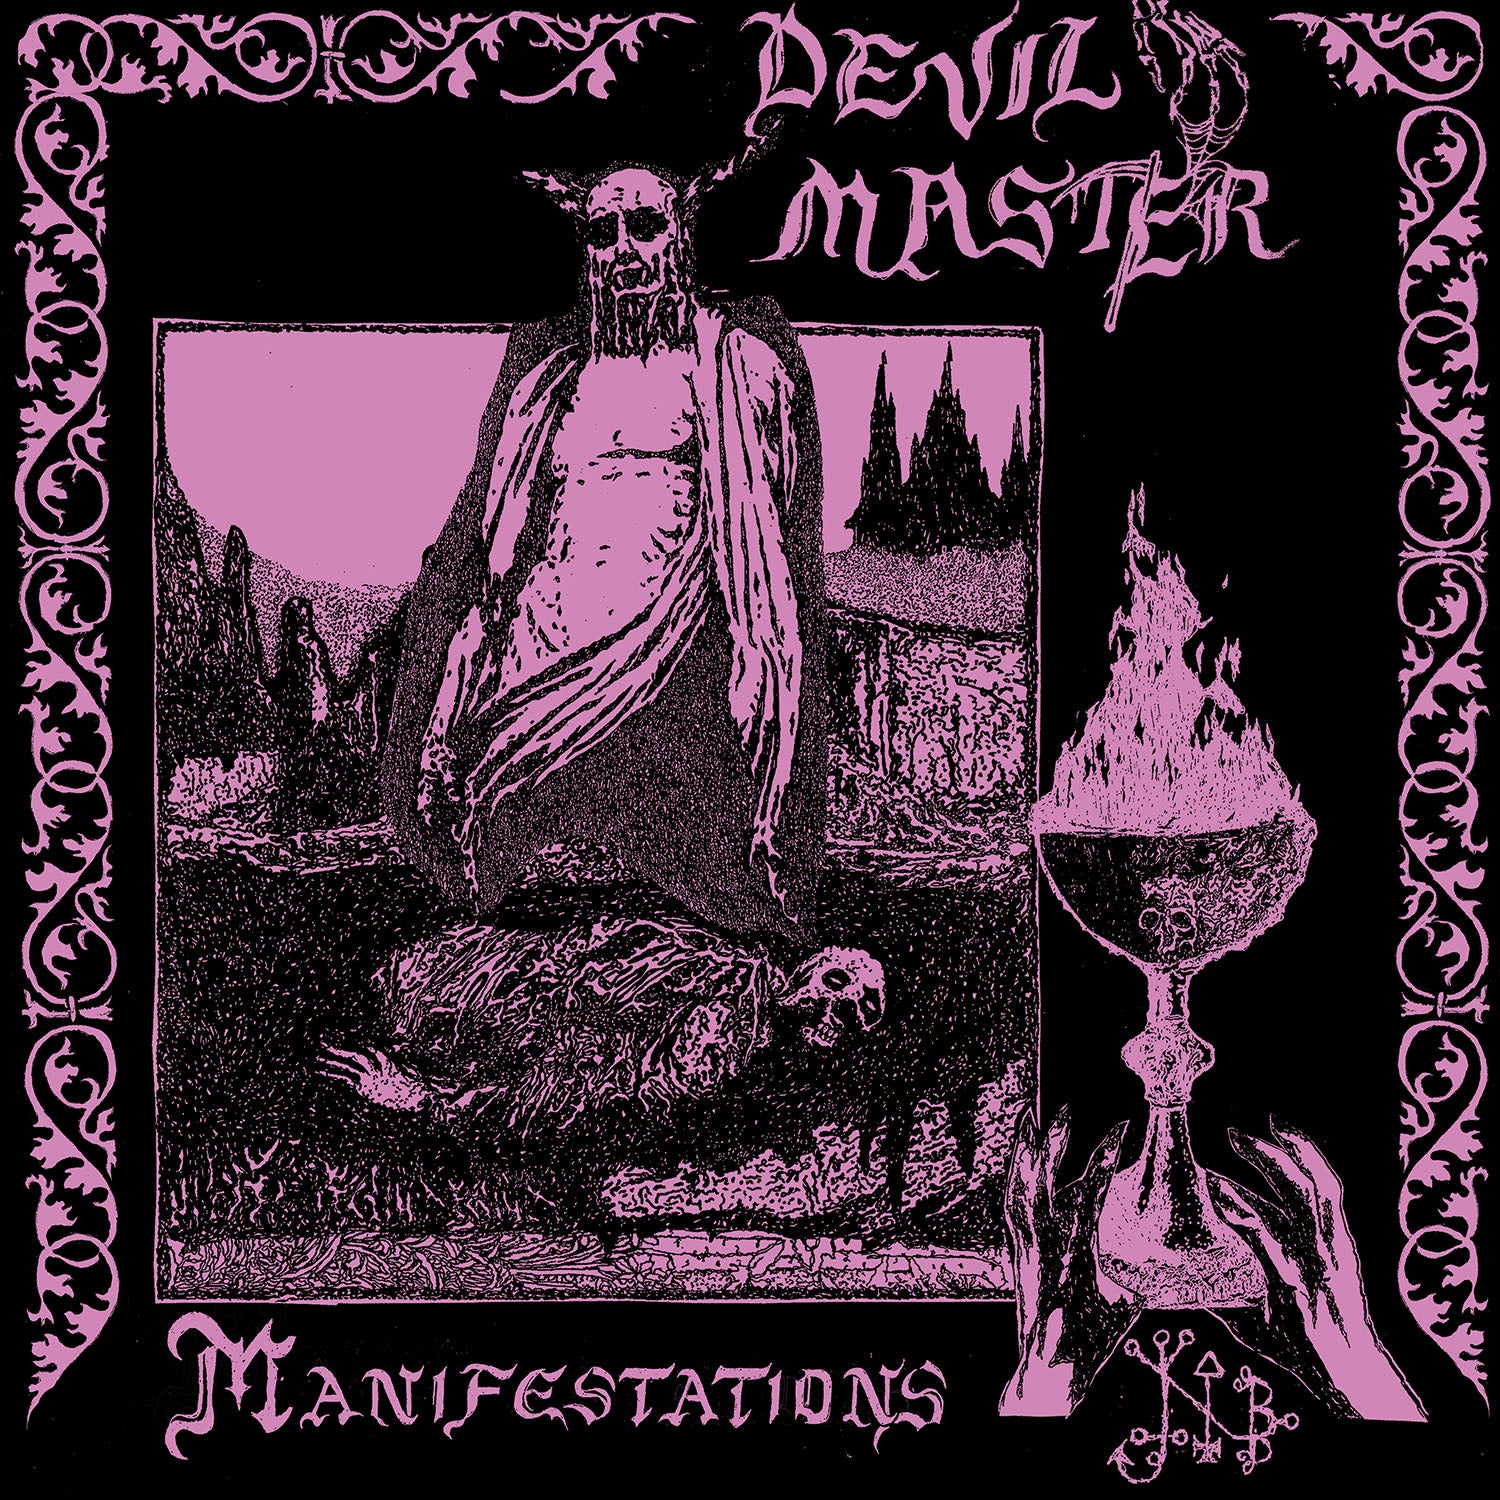 DEVIL MASTER "Manifestations" 12"